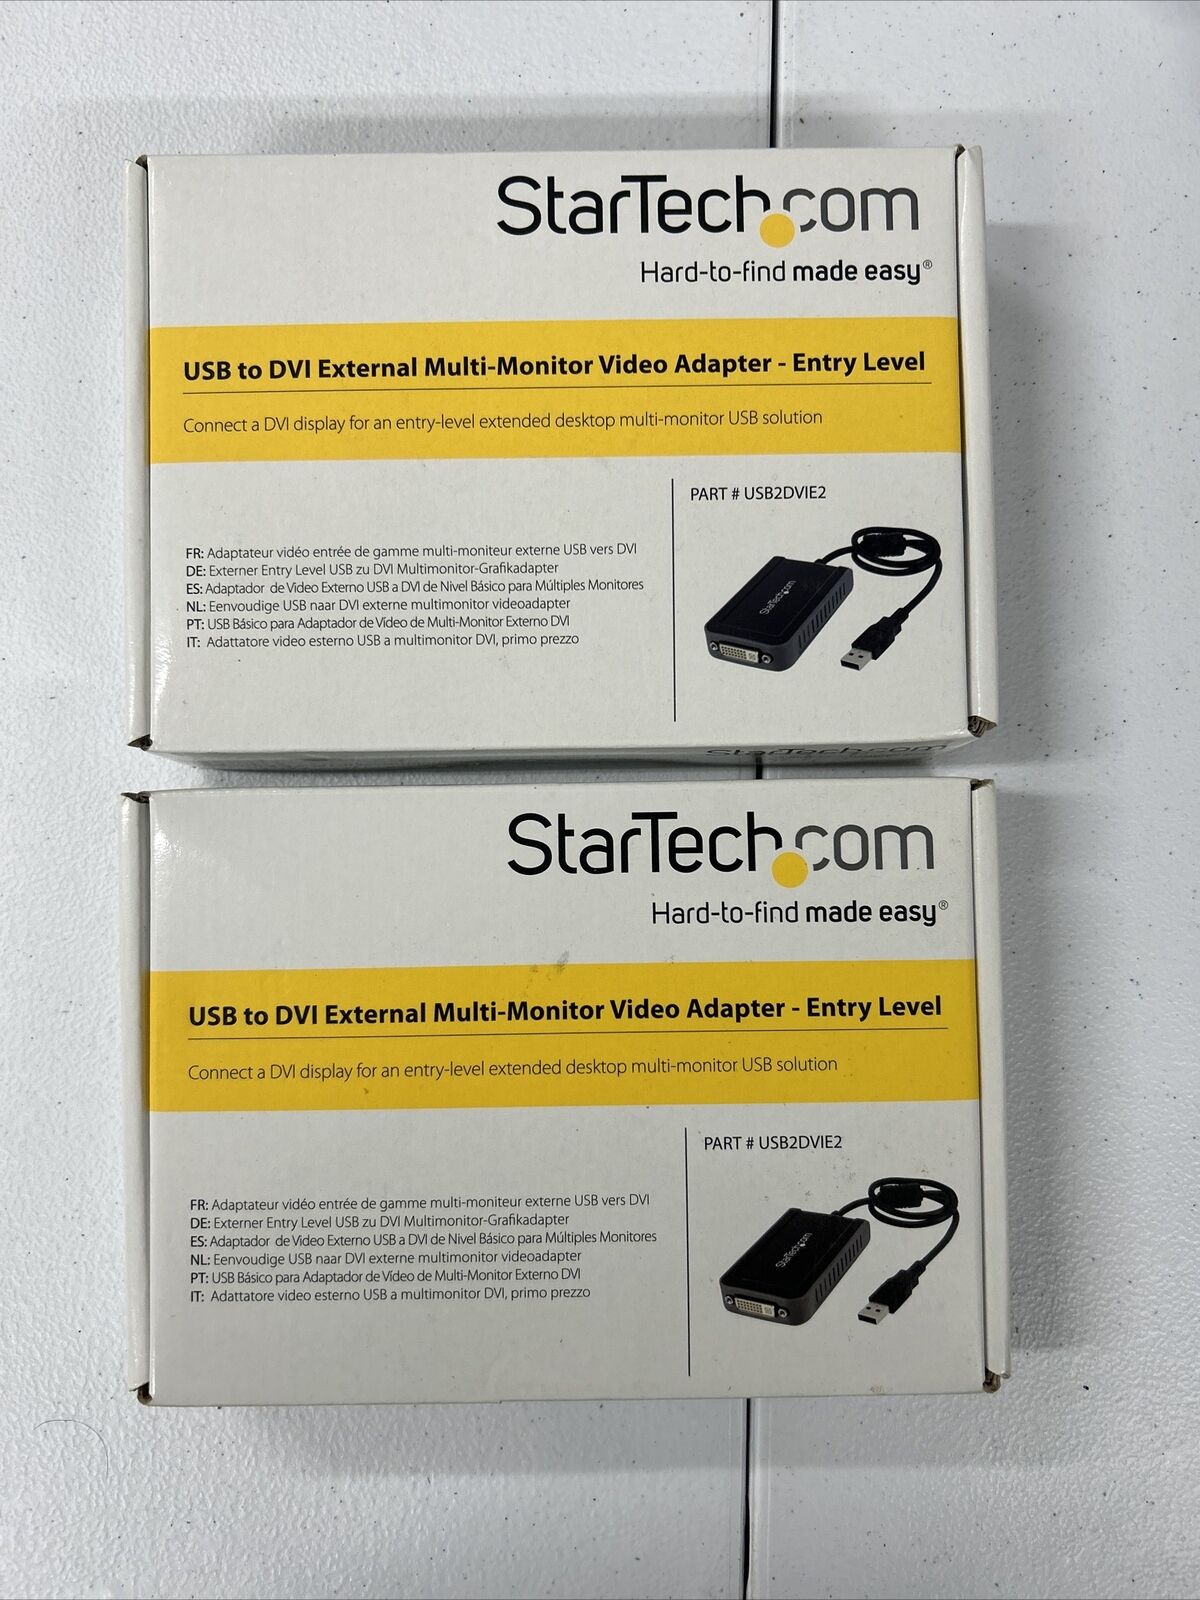 2 StarTech USB to DVI Adapter Part # USB2DVIE2